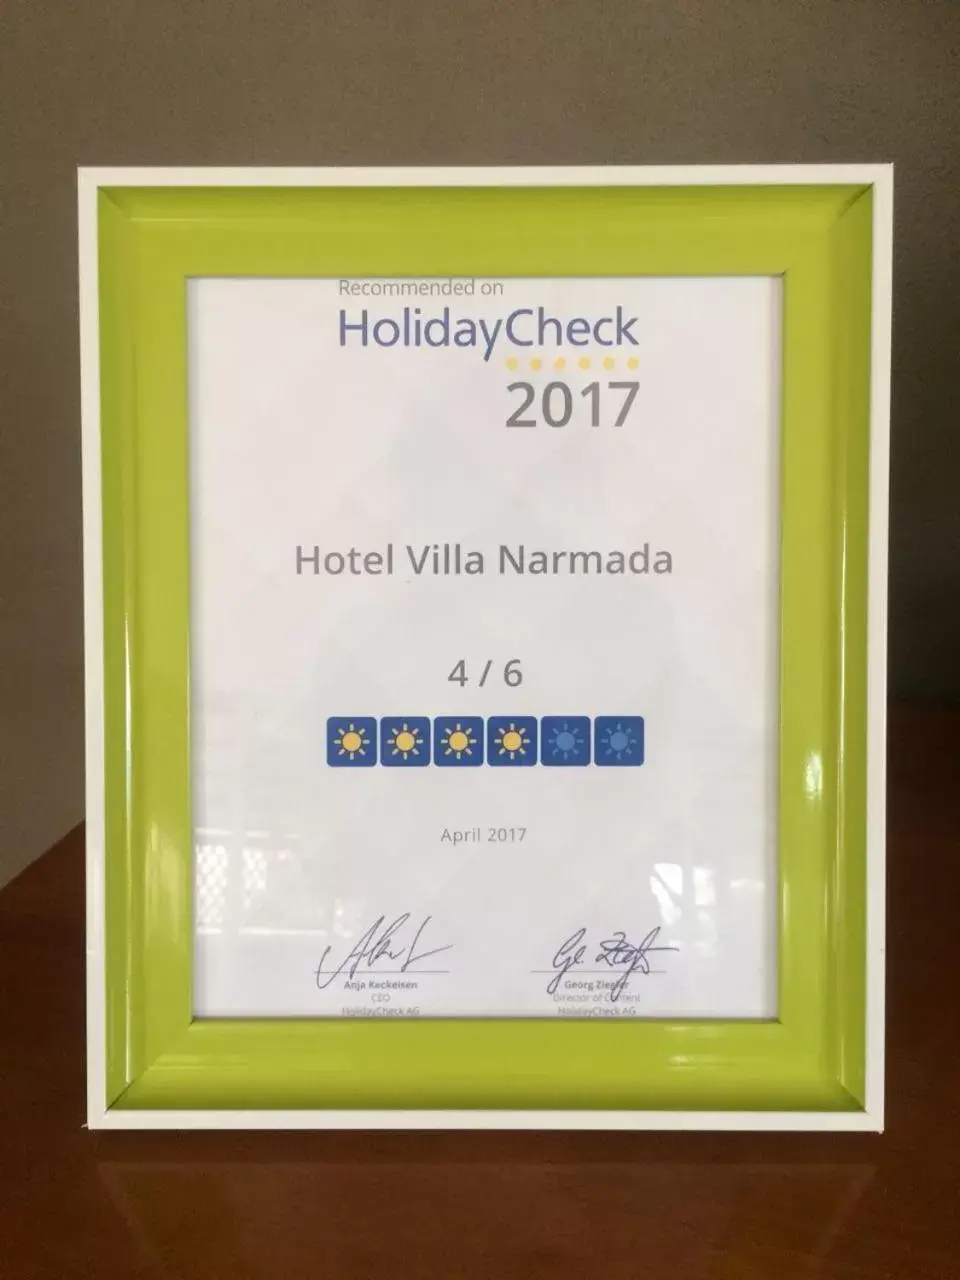 Certificate/Award in Villa Narmada